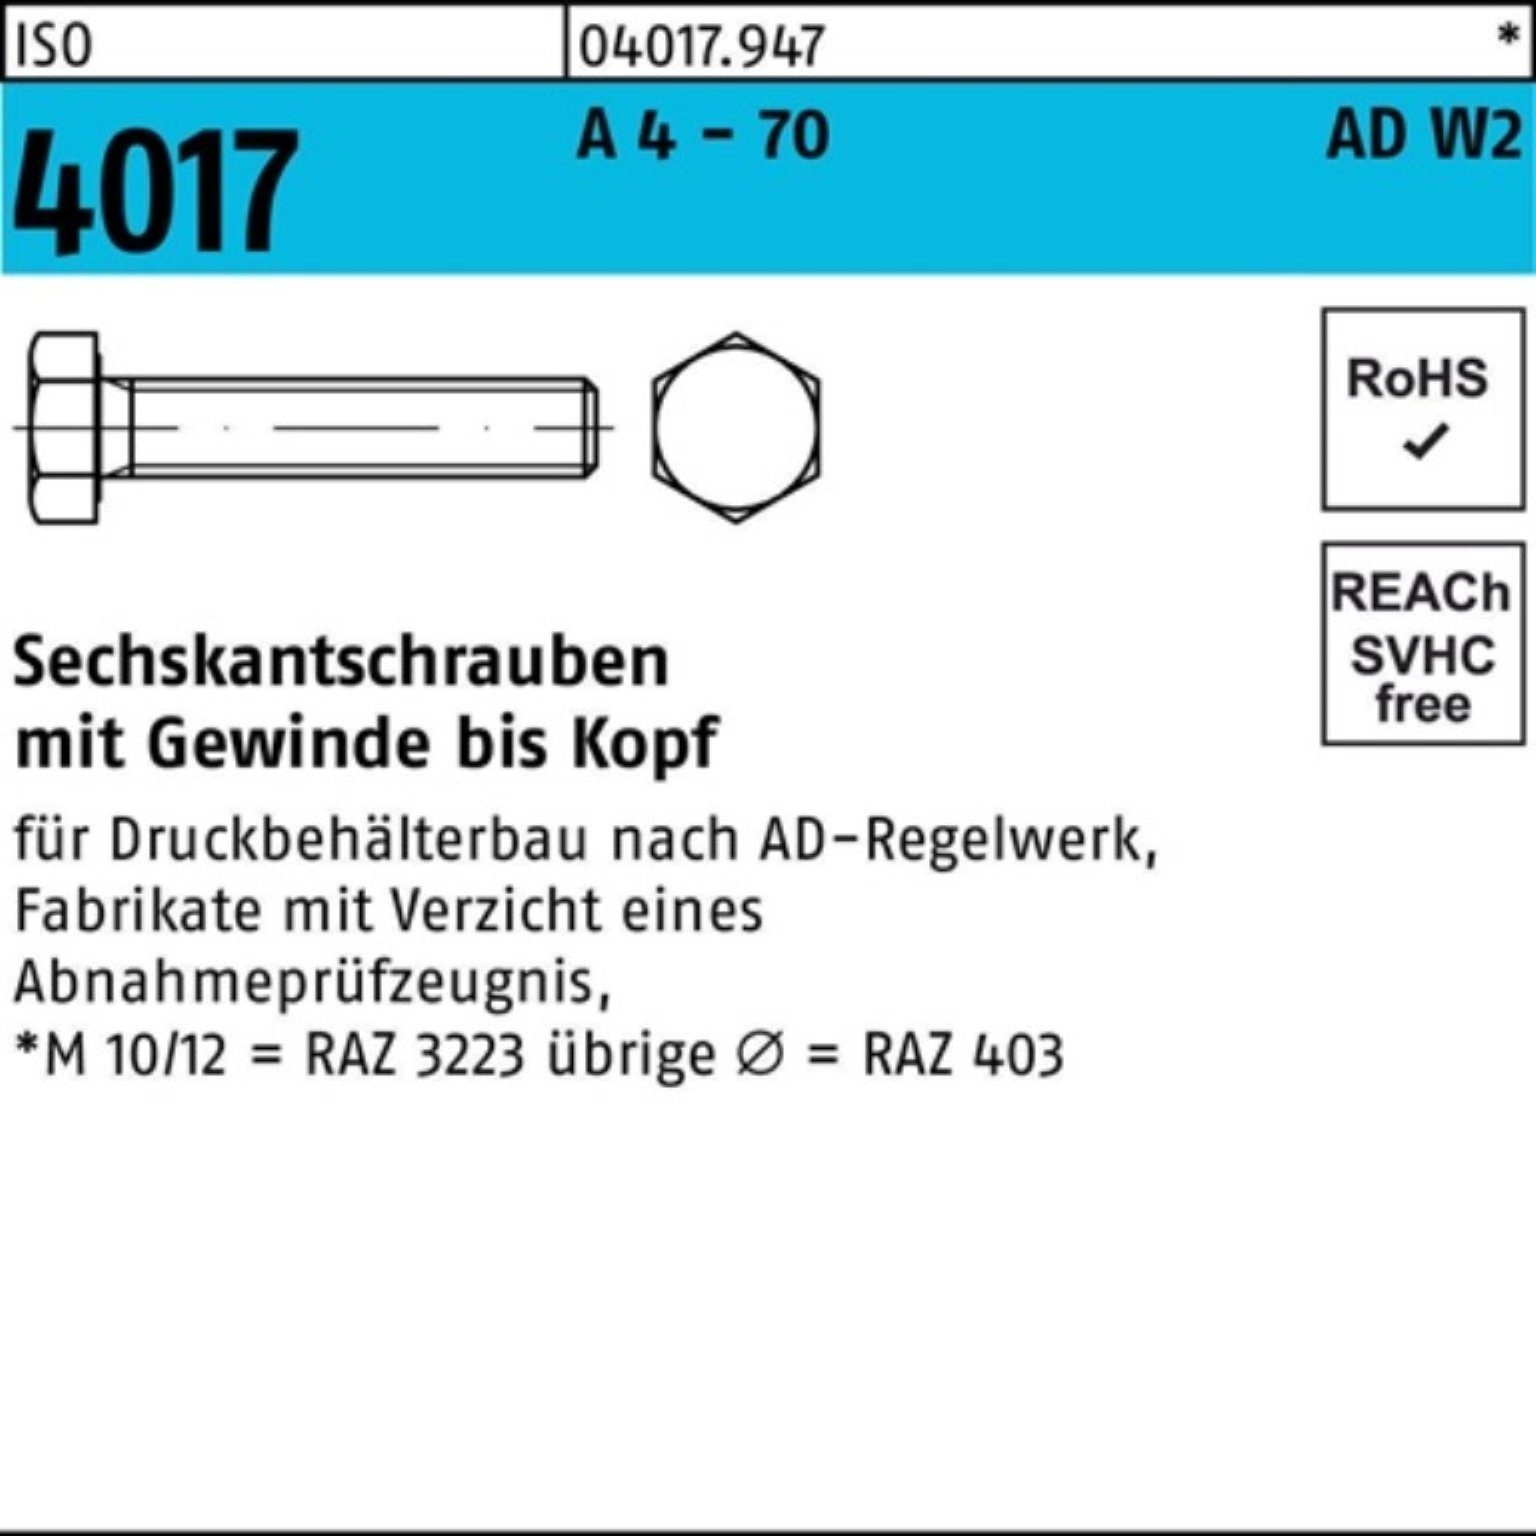 Bufab Sechskantschraube 100er Pack Sechskantschraube ISO 4017 VG M10x 80 A 4 - 70 AD-W2 50 St